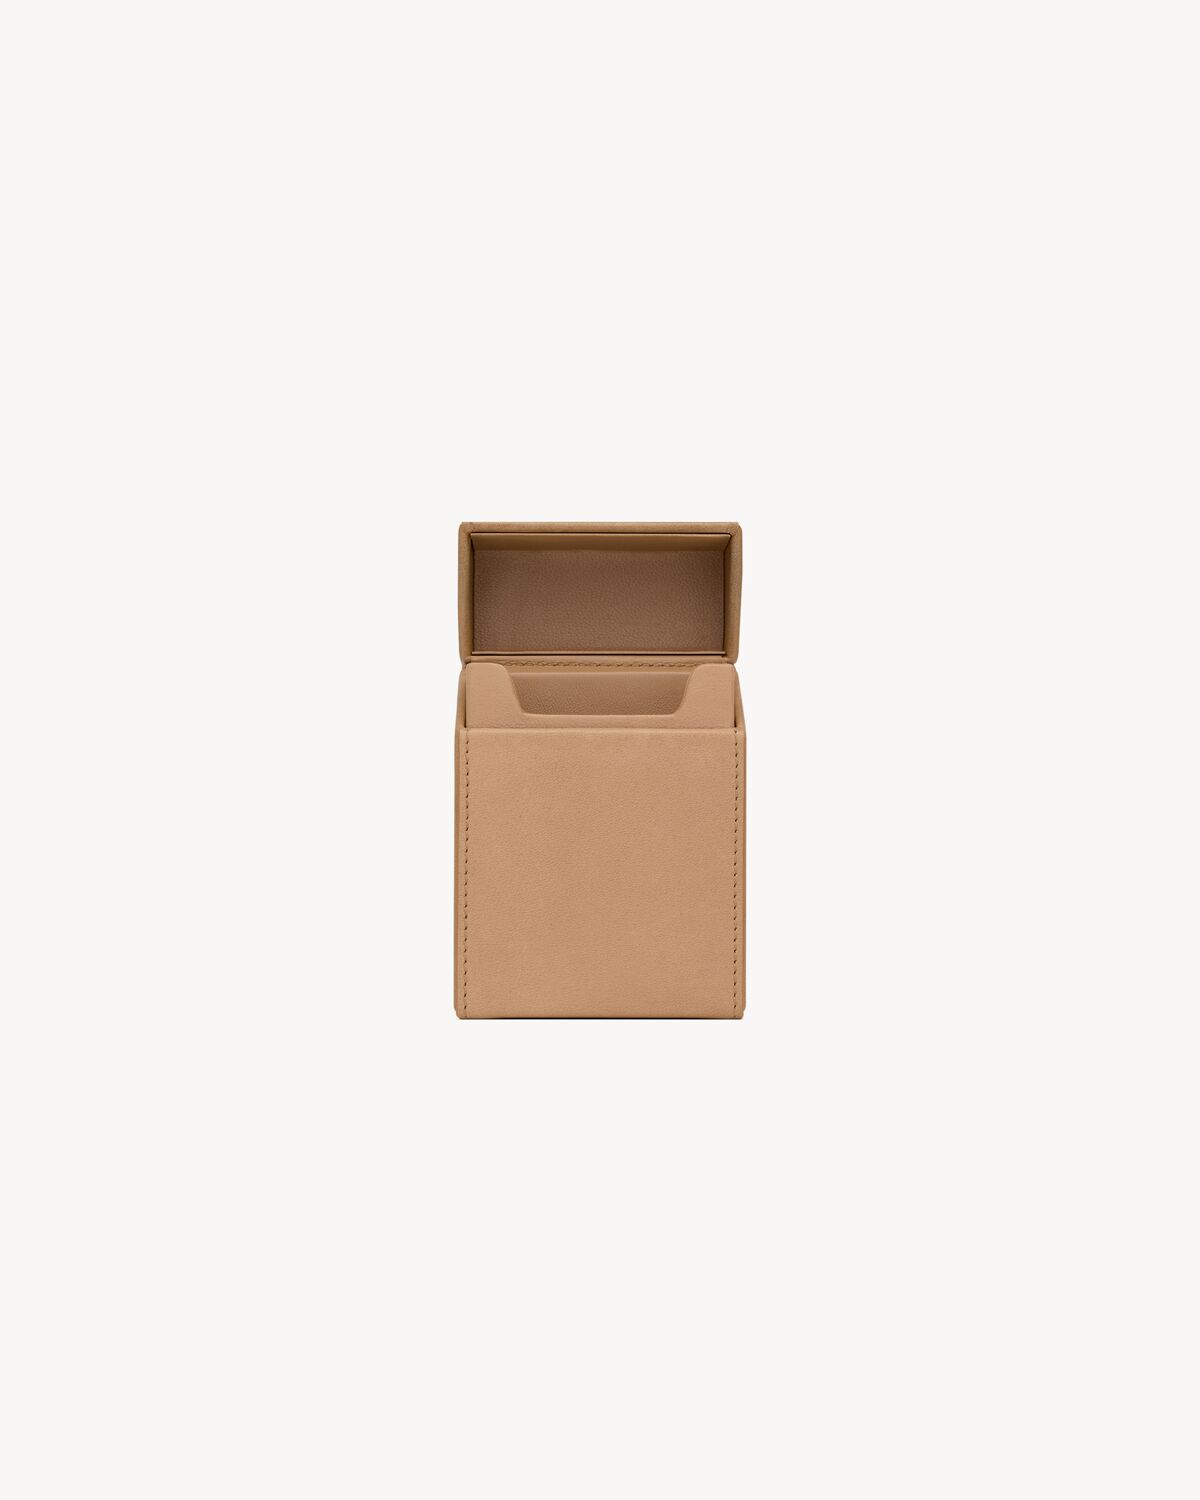 SAINT LAURENT PARIS cigarette box in vegetable-tanned leather